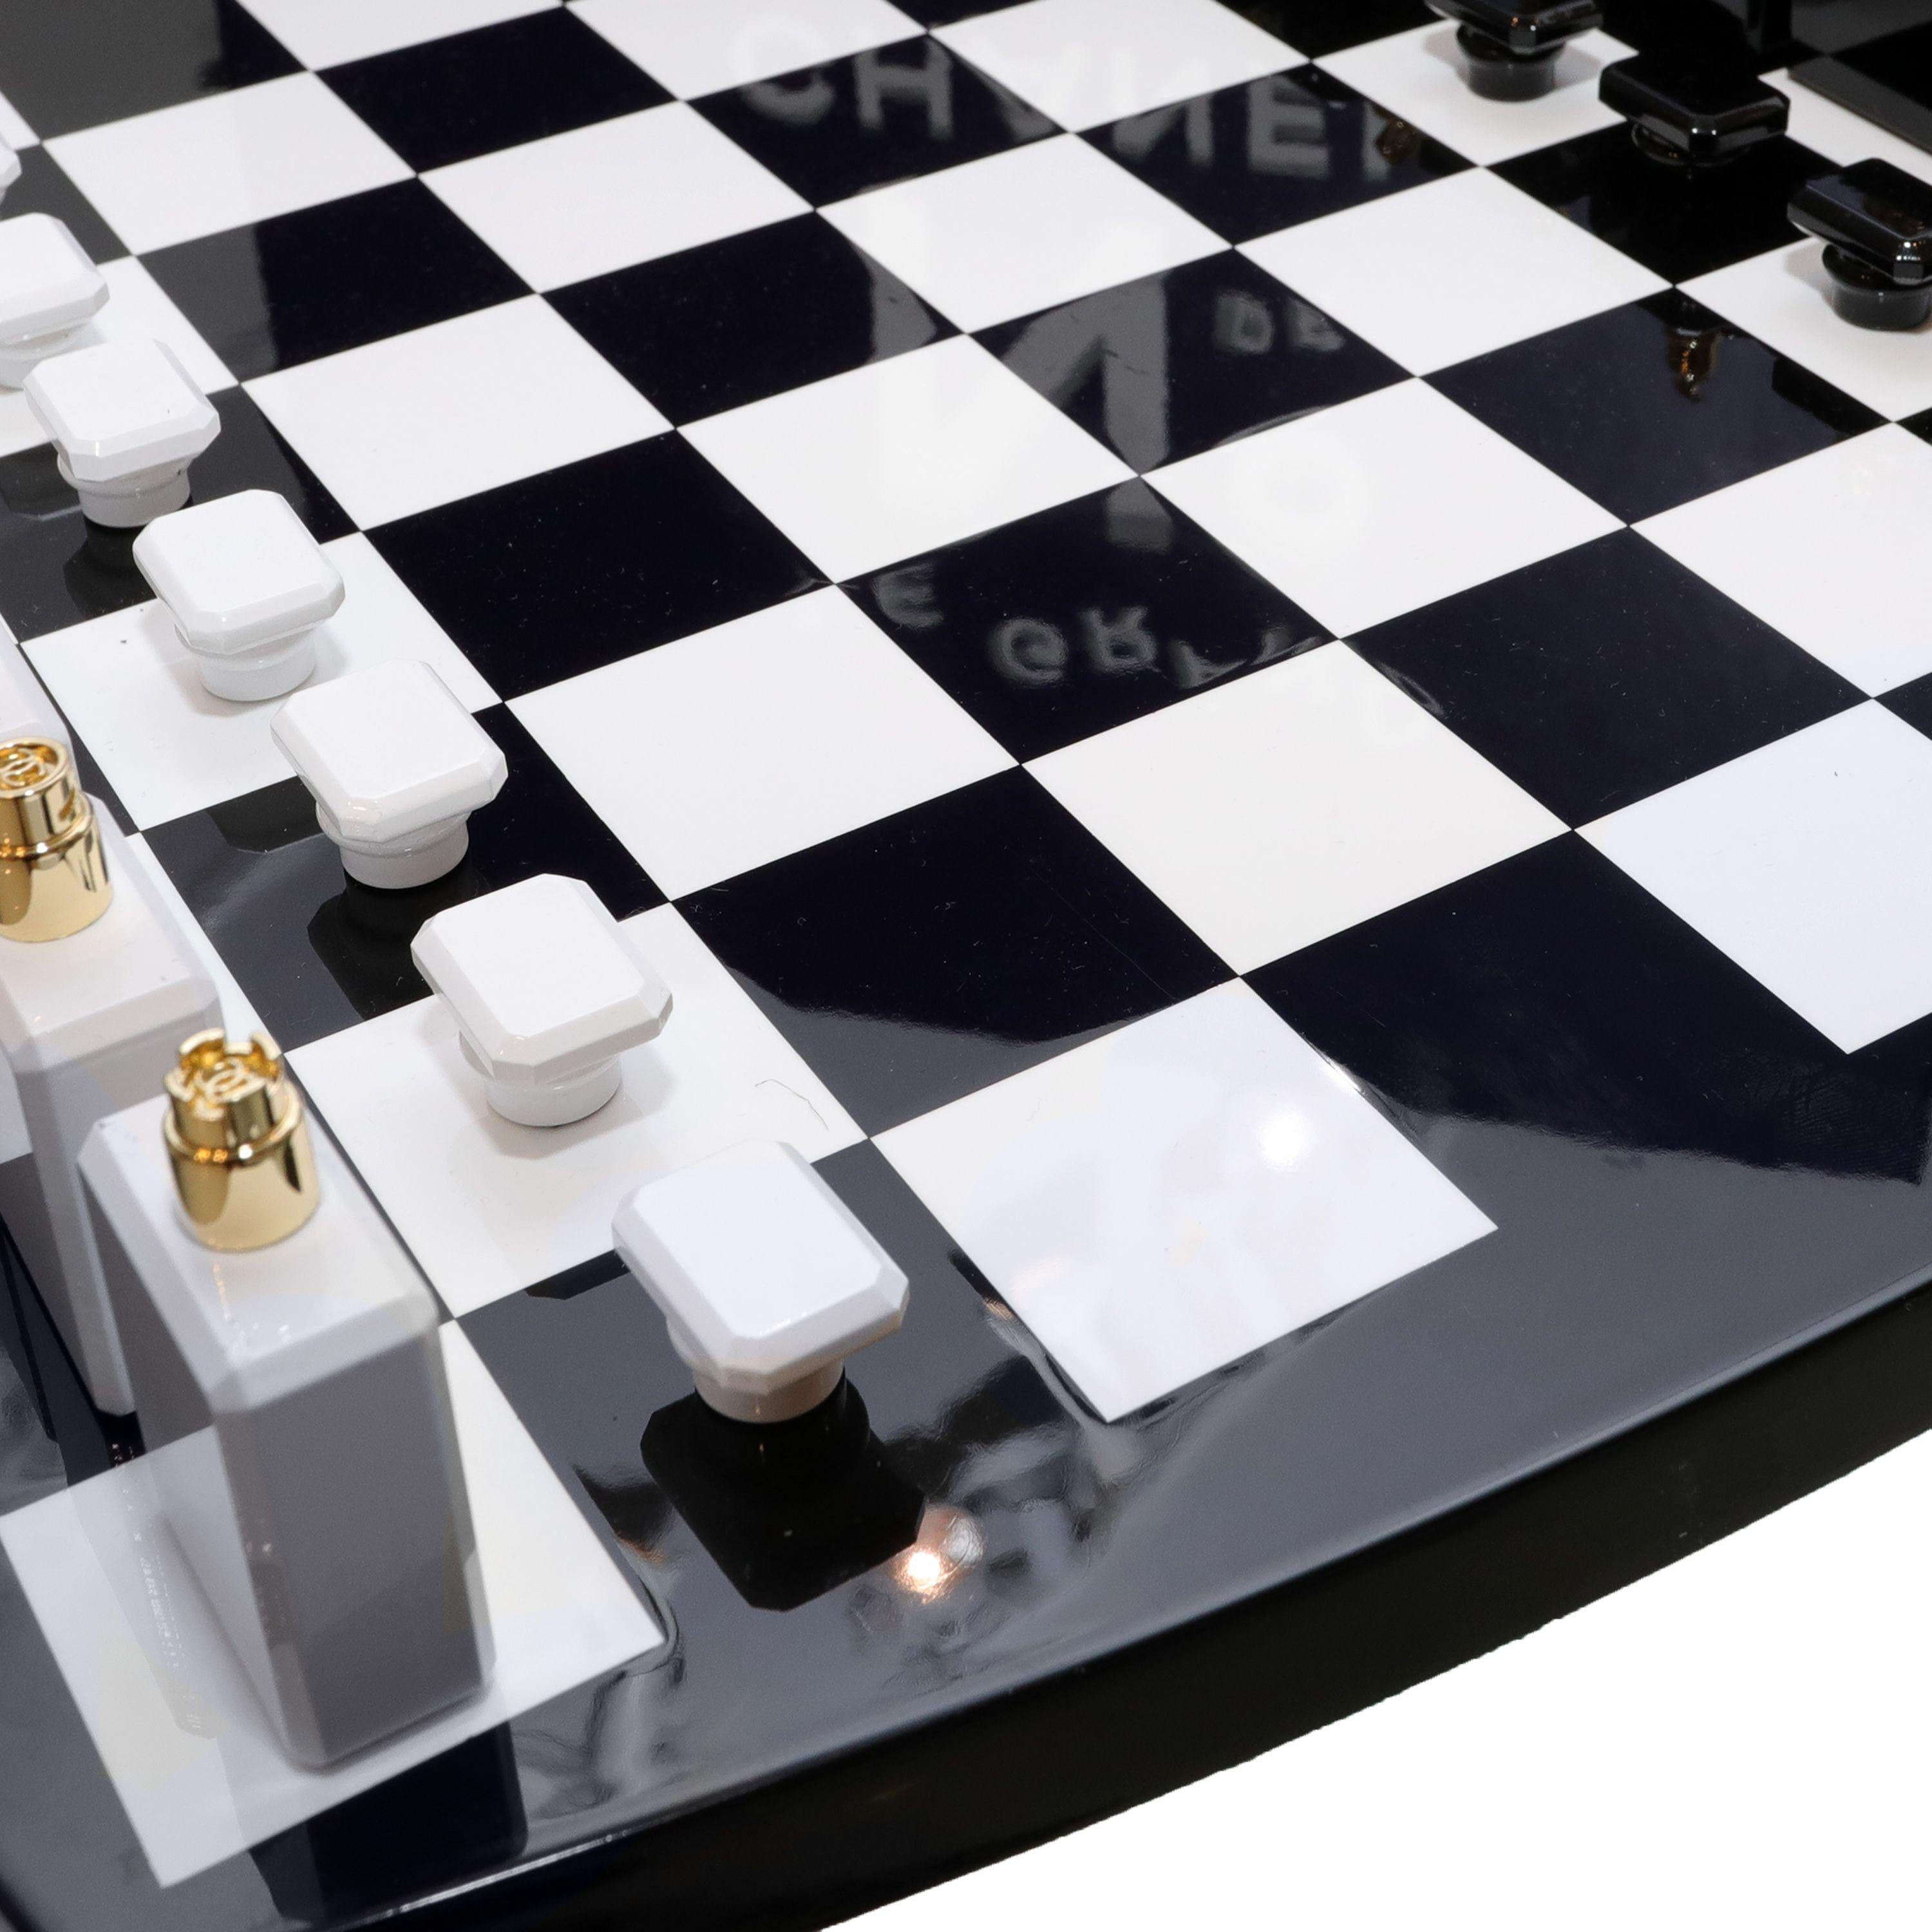 chanel chess set